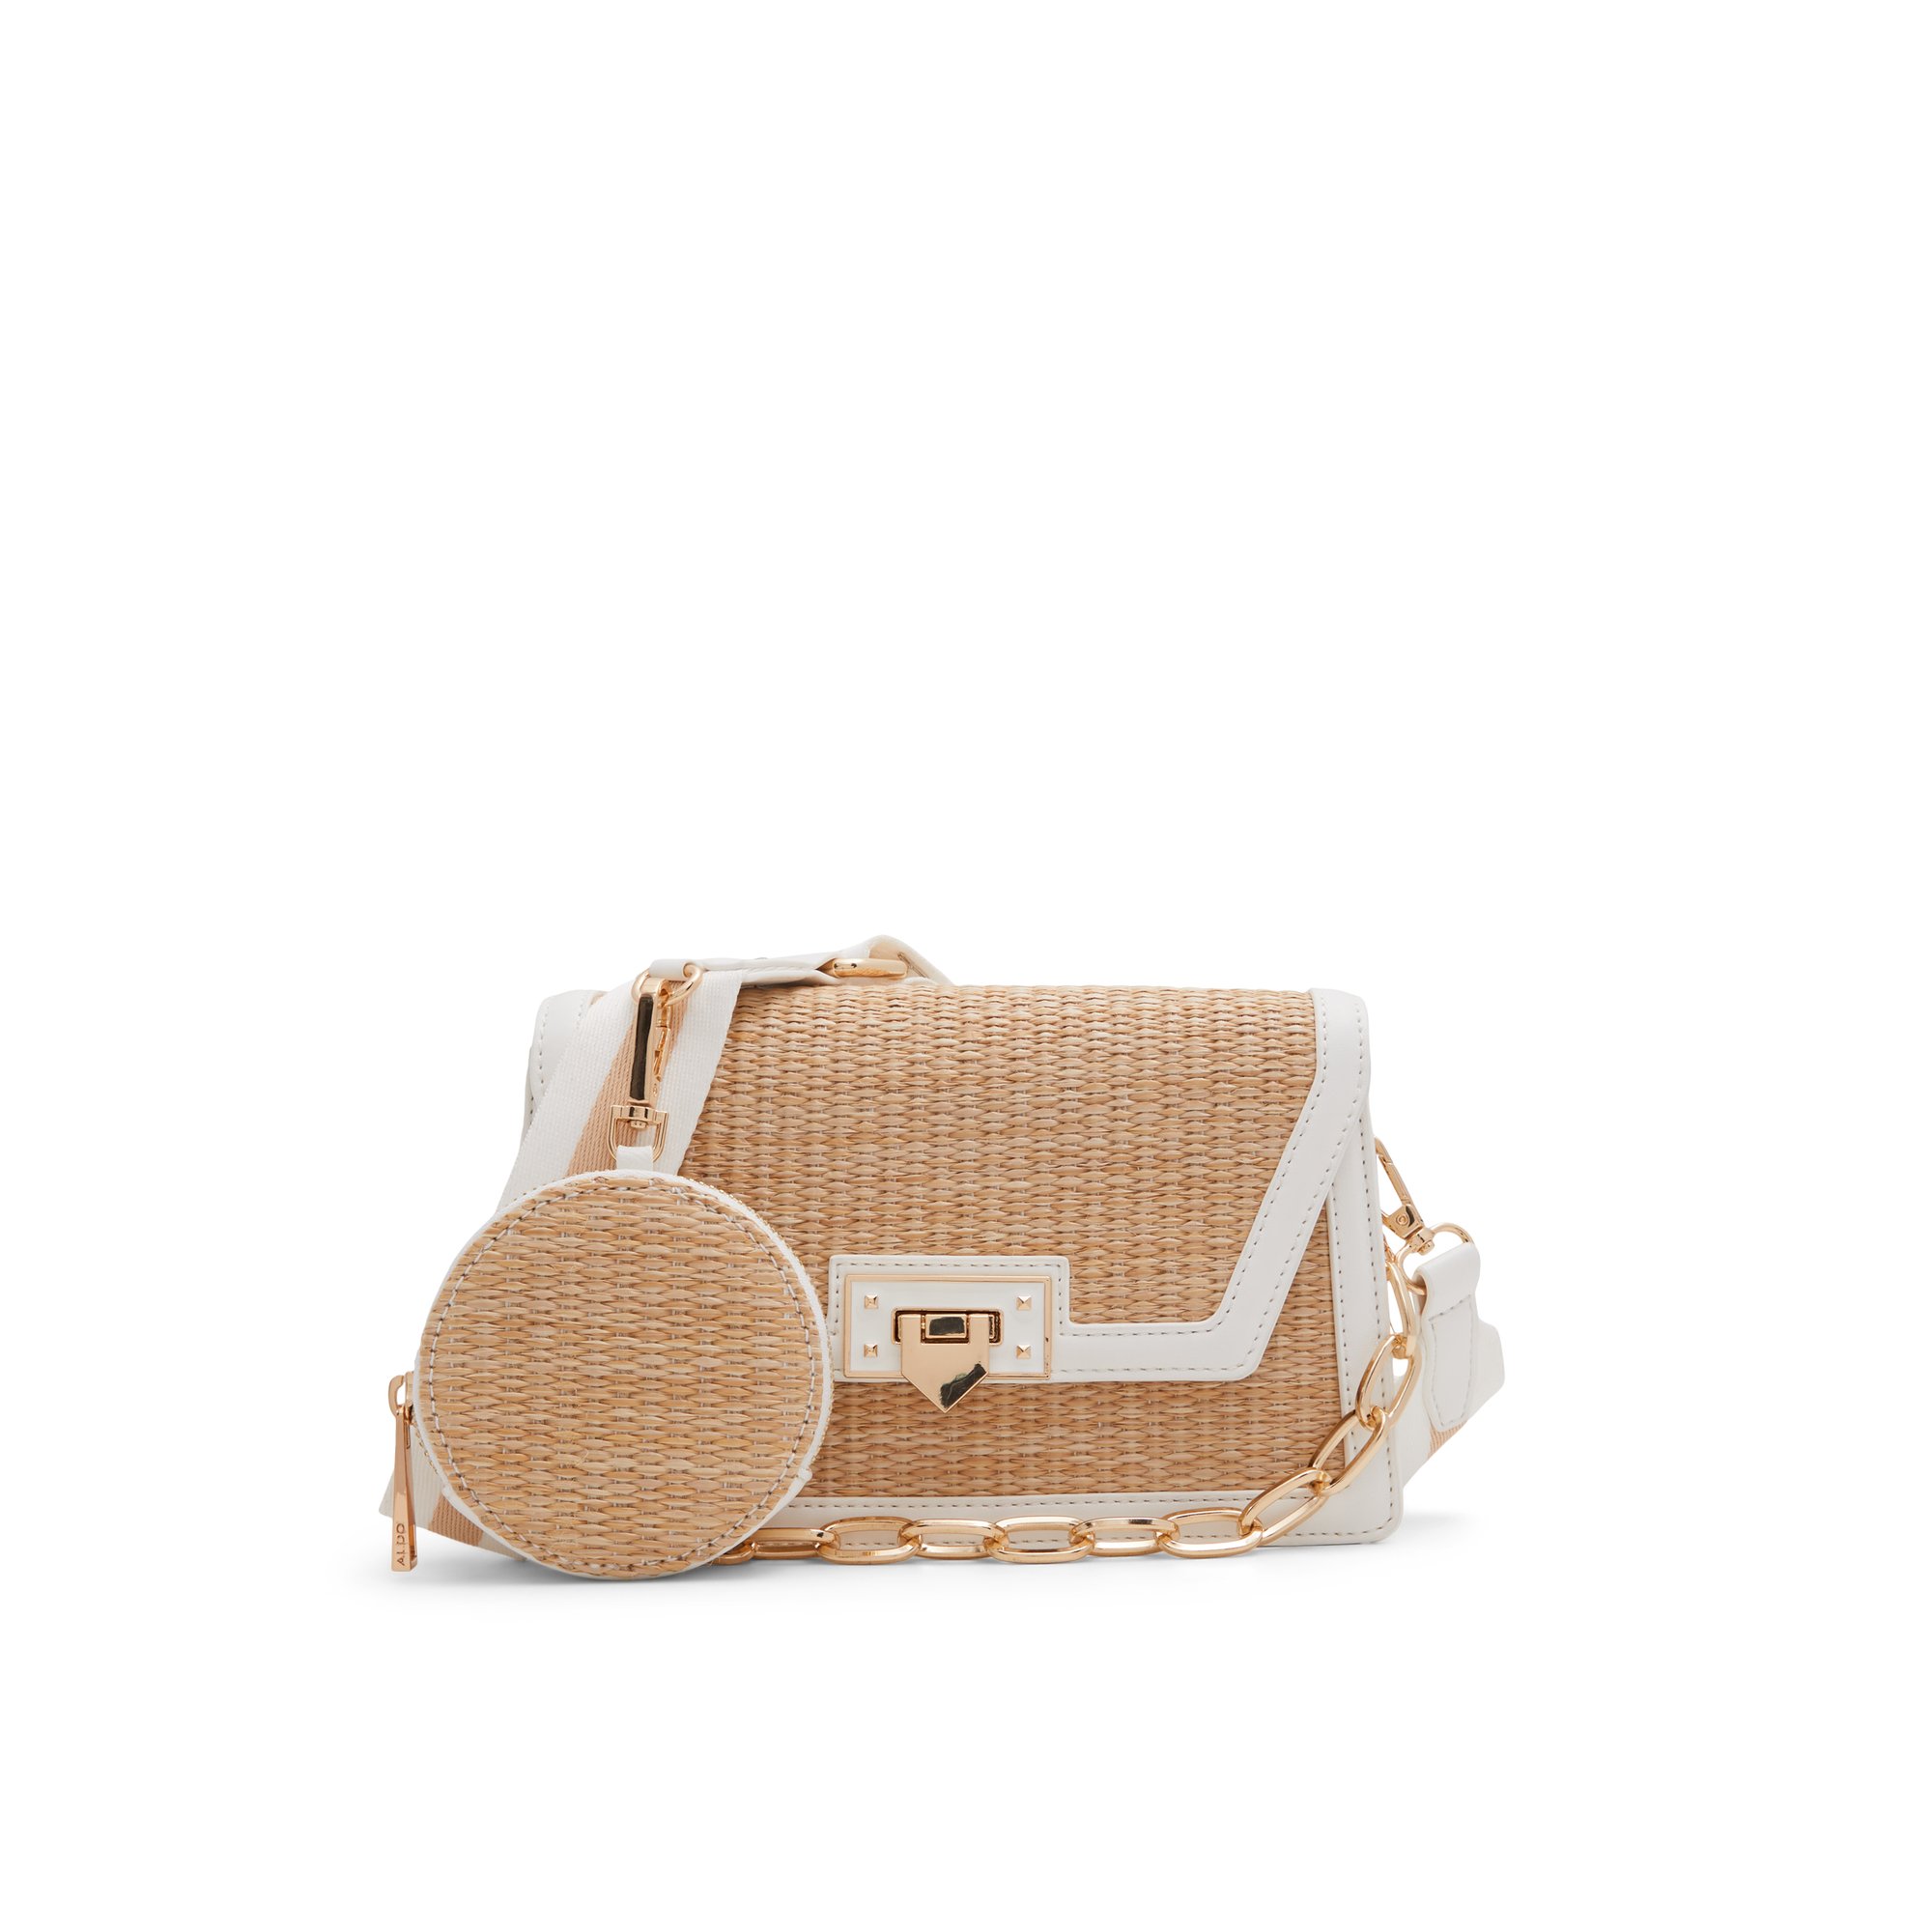 ALDO Beachdaleex - Women's Handbags Crossbody - Beige